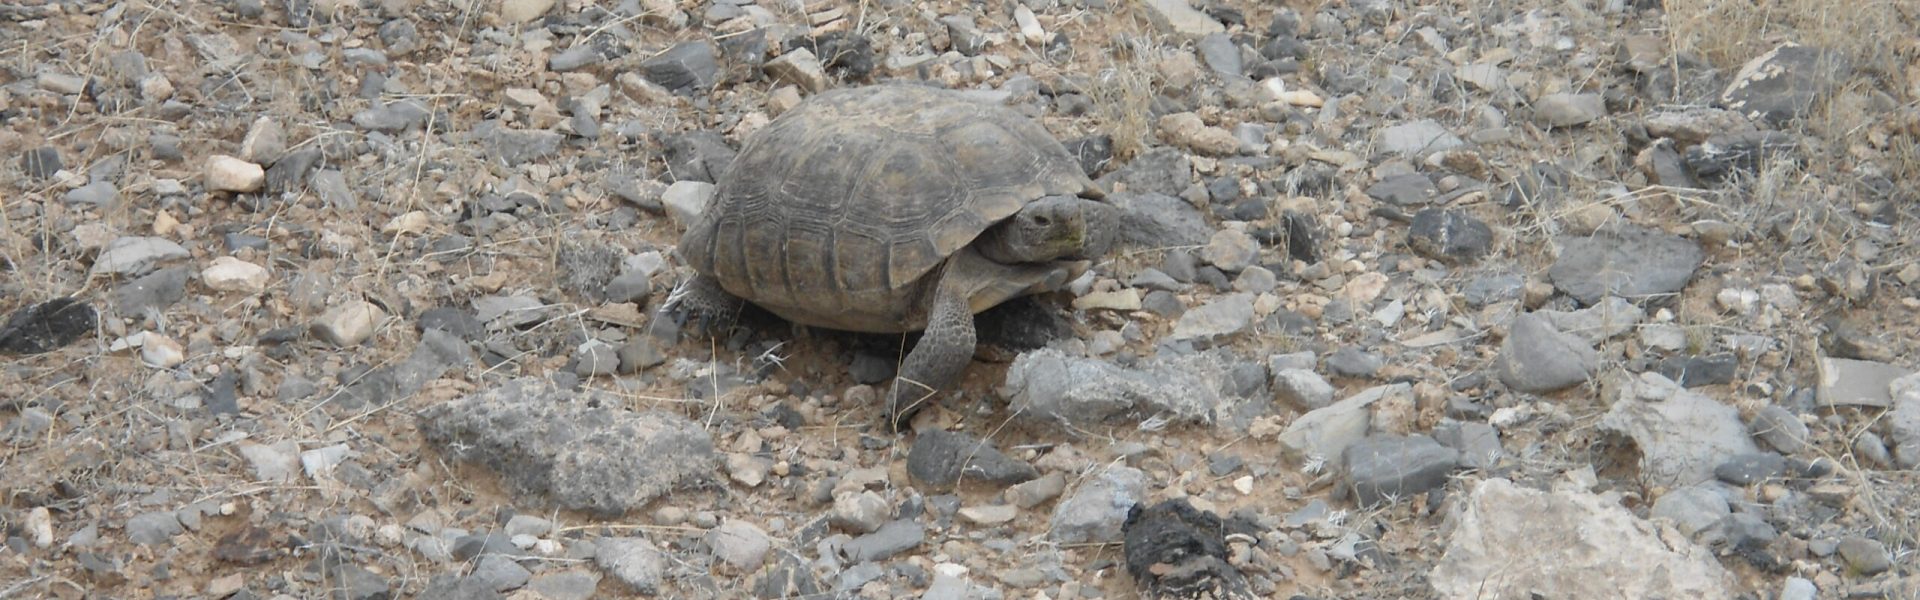 A Mojave desert tortoise crawling through its desert habitat